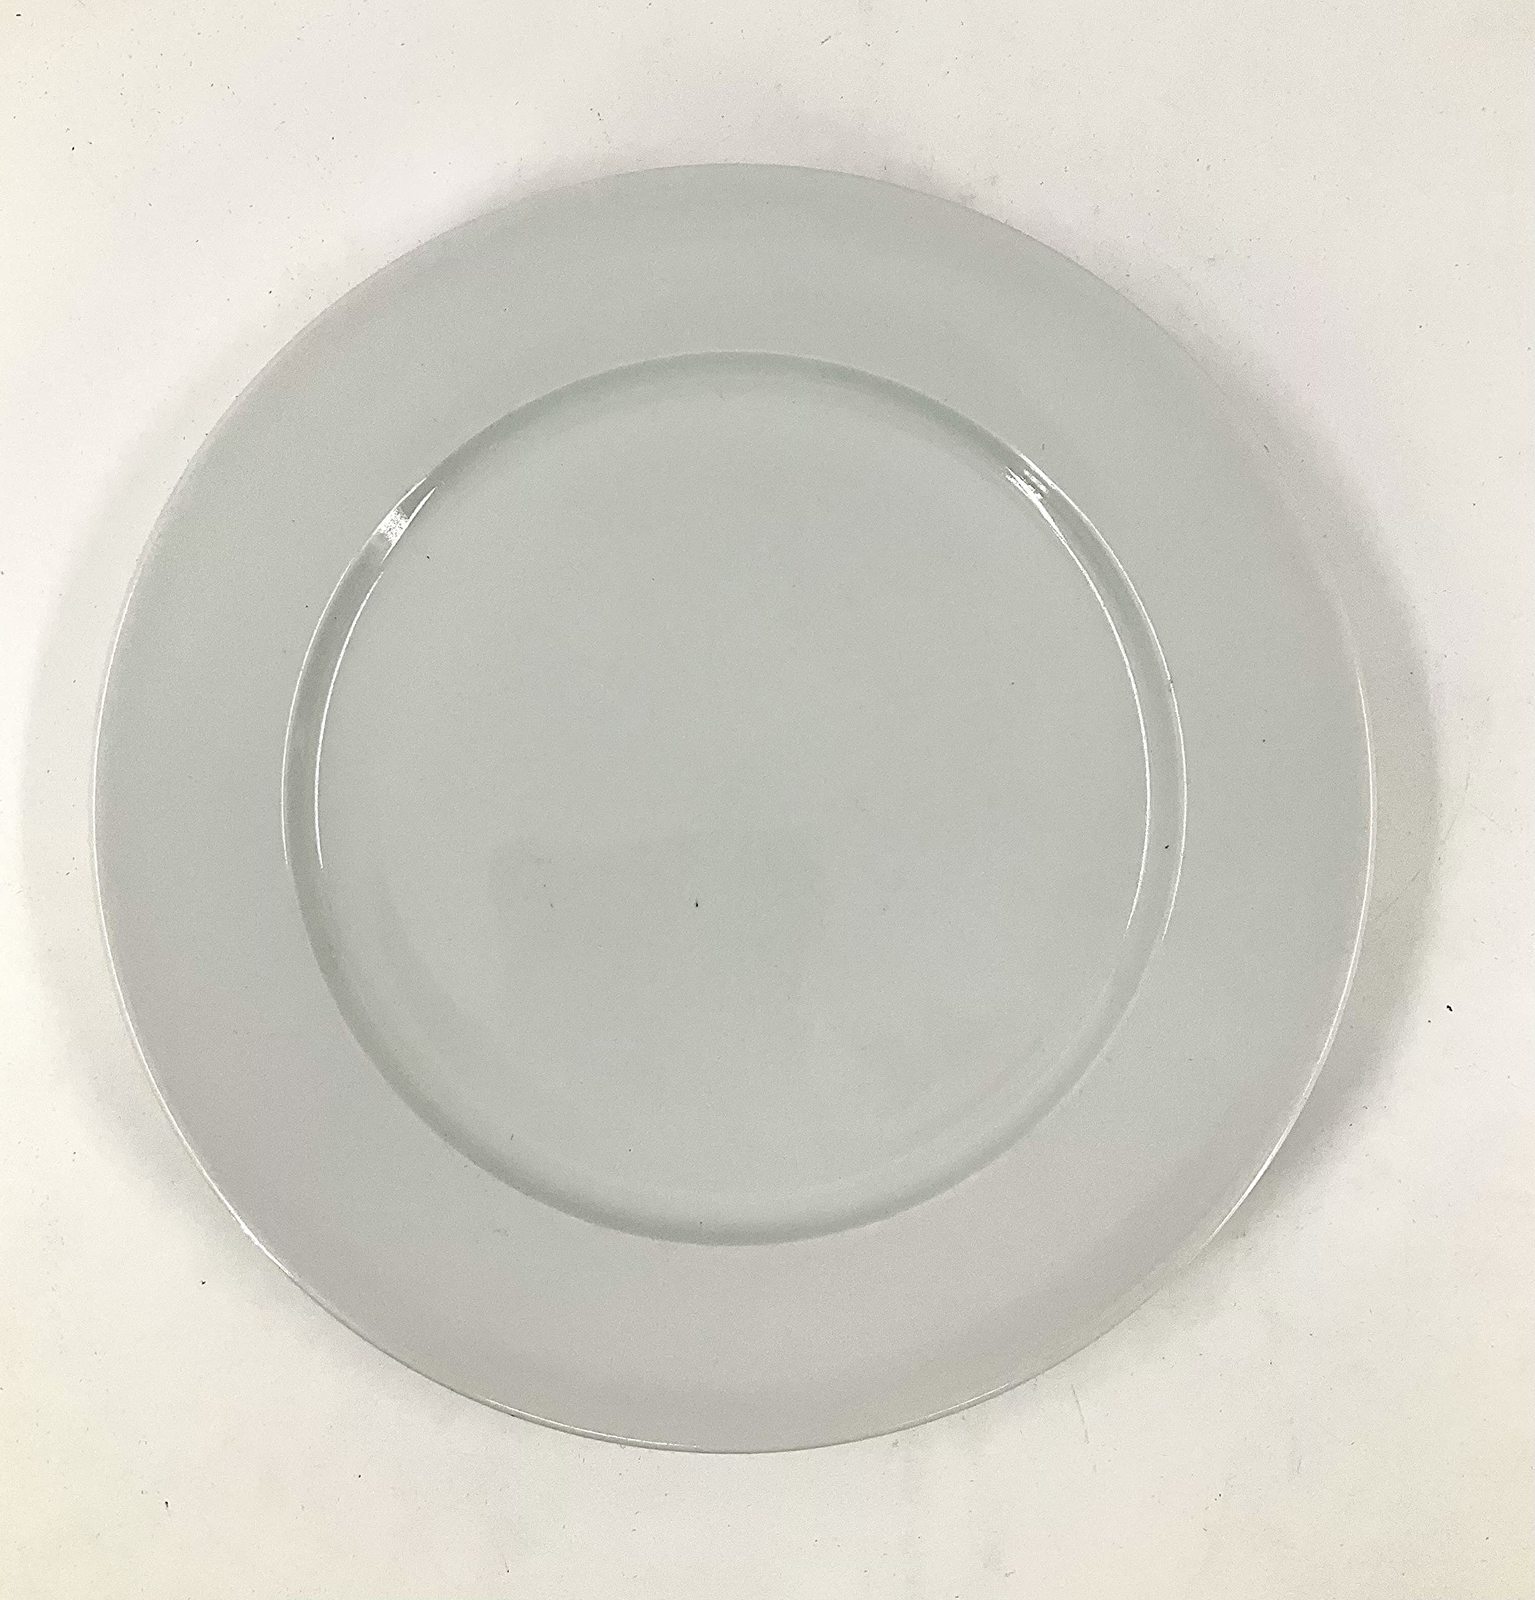 Williams-Sonoma Everyday White Dinner Plate - $27.83